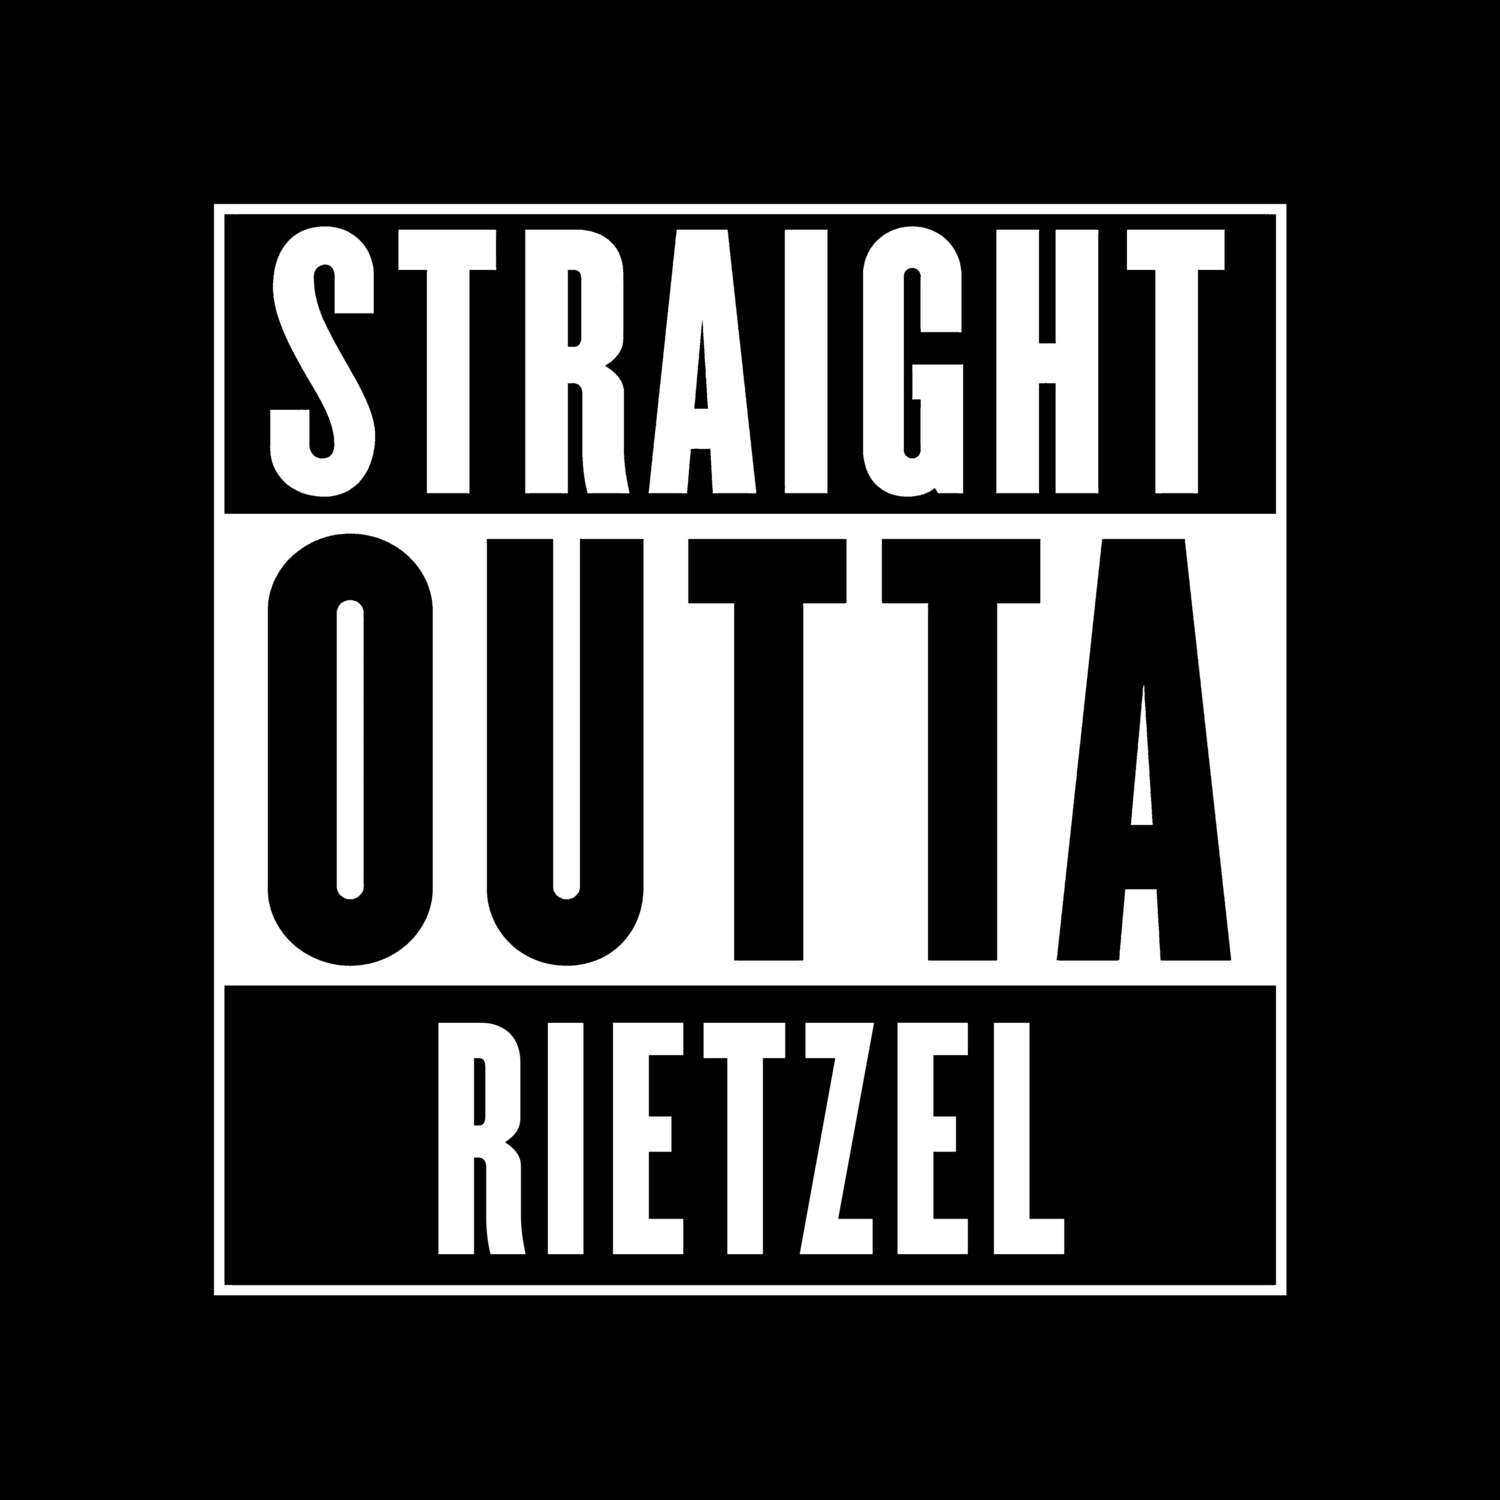 Rietzel T-Shirt »Straight Outta«